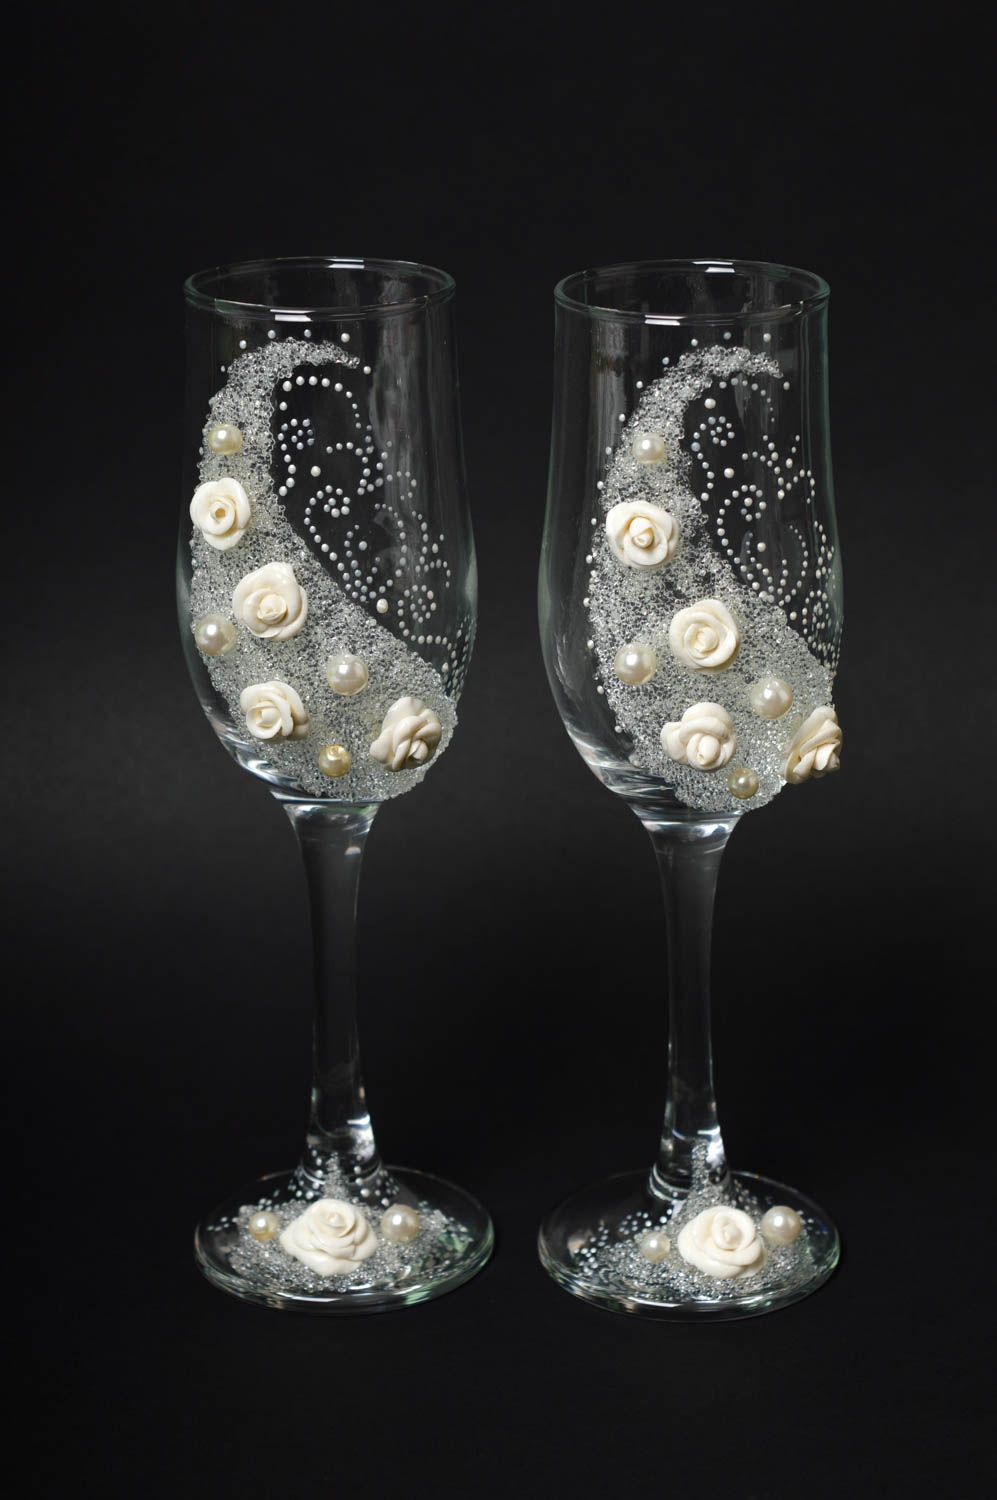 Handmade wedding glasses ideas wedding champagne glasses for bride and groom photo 2